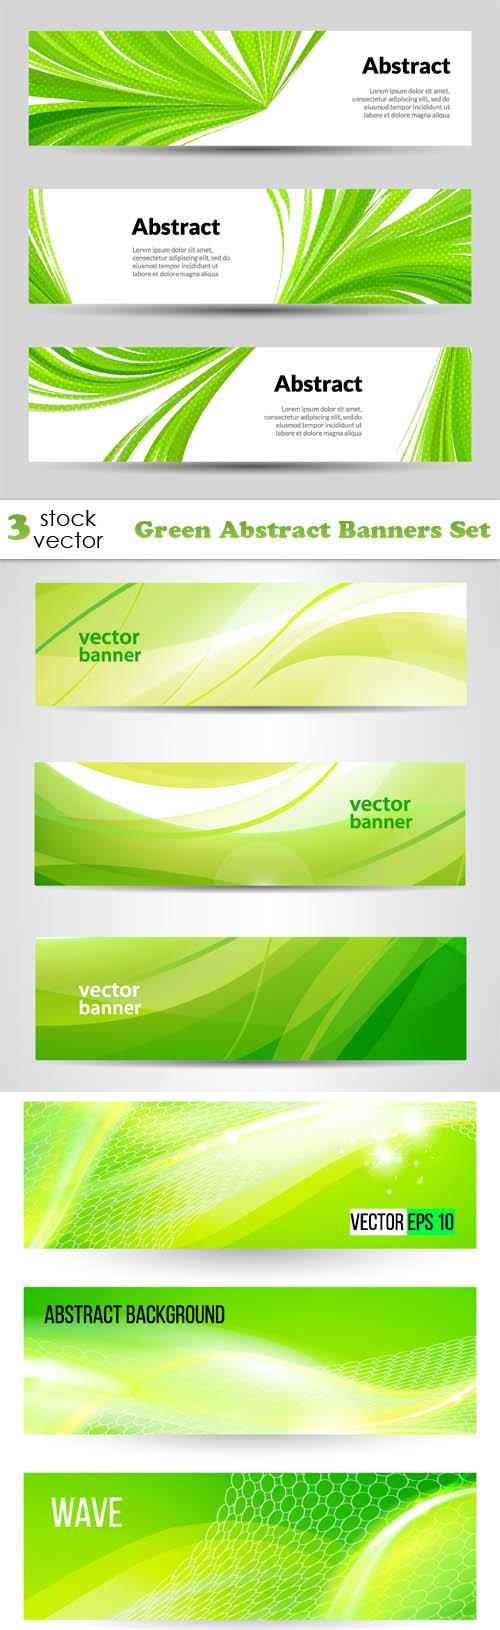 Vectors - Green Abstract Banners Set